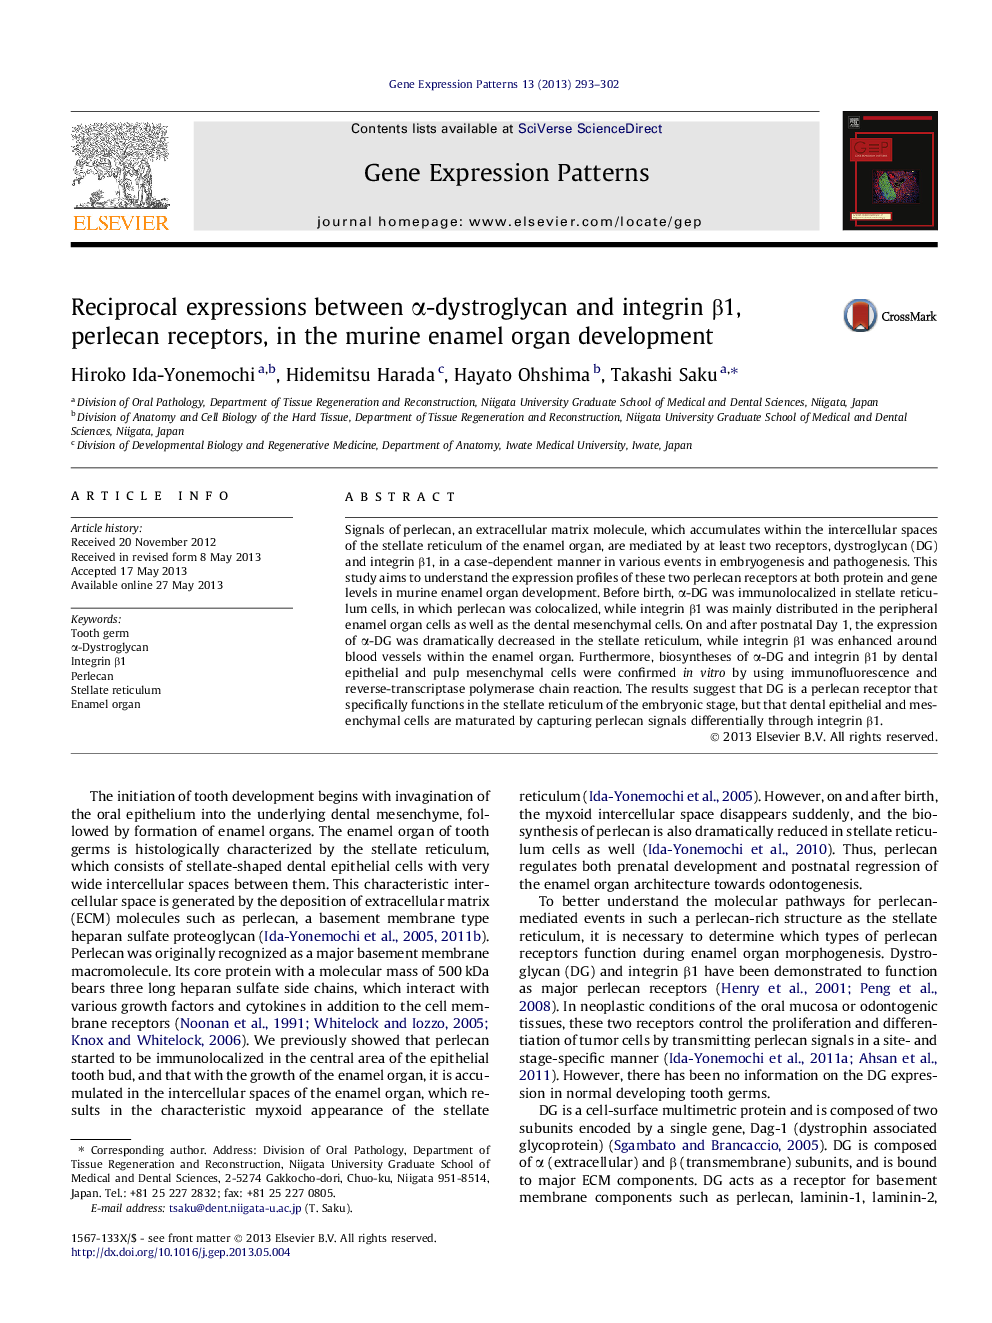 Reciprocal expressions between Î±-dystroglycan and integrin Î²1, perlecan receptors, in the murine enamel organ development